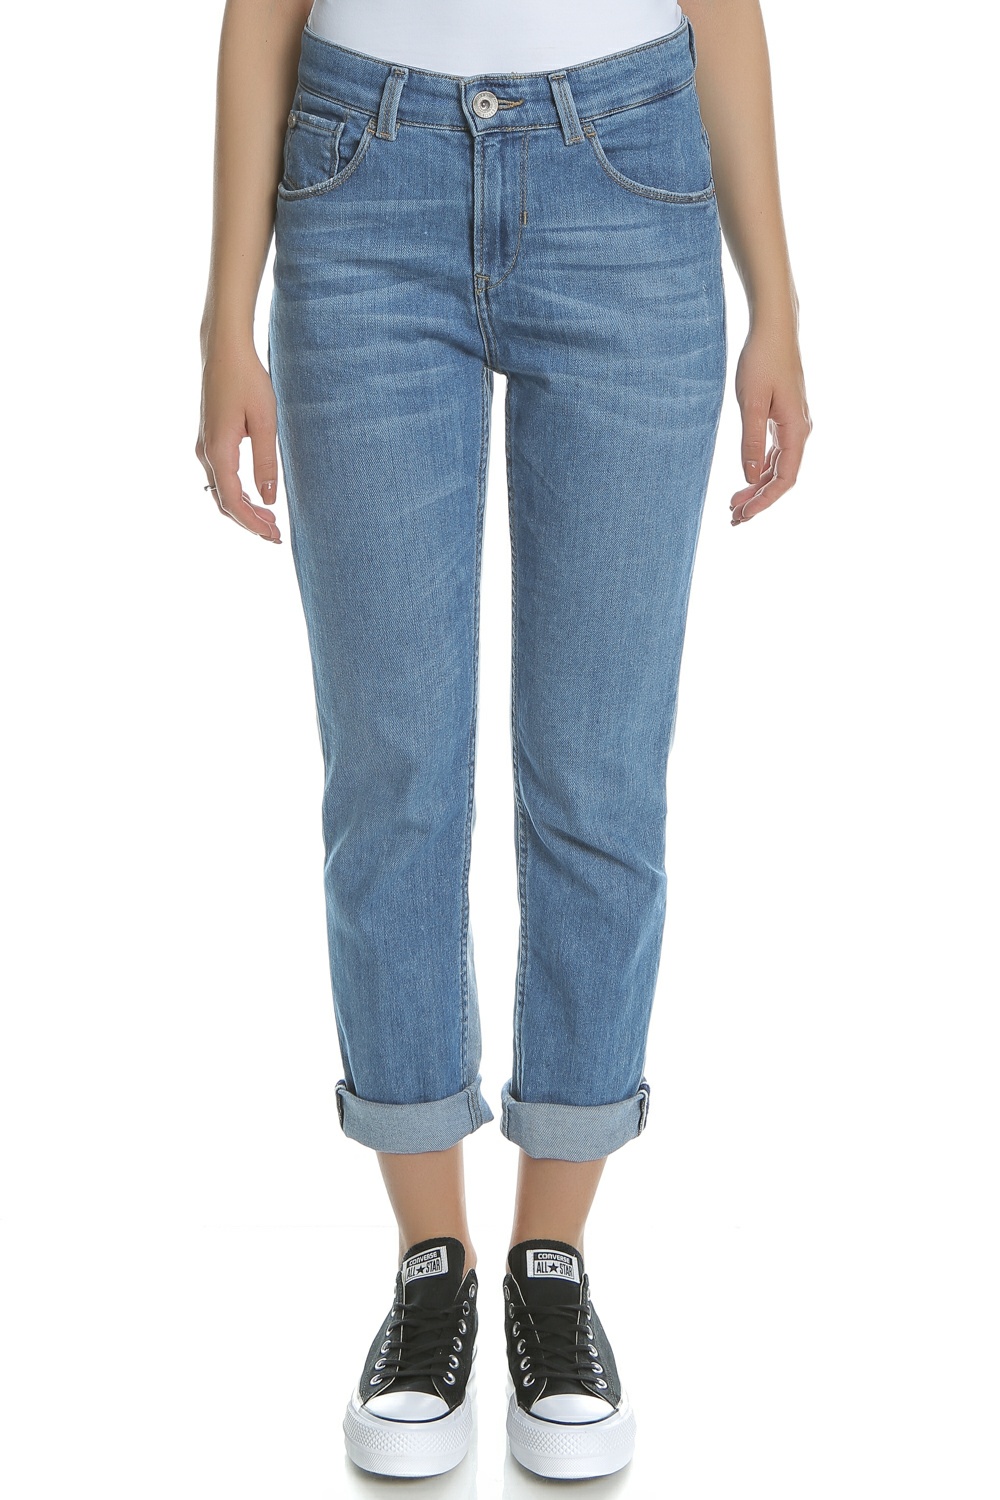 GARCIA JEANS – Γυναικείο τζιν παντελόνι Garcia Jeans δίχρωμο 1606791.0-0010